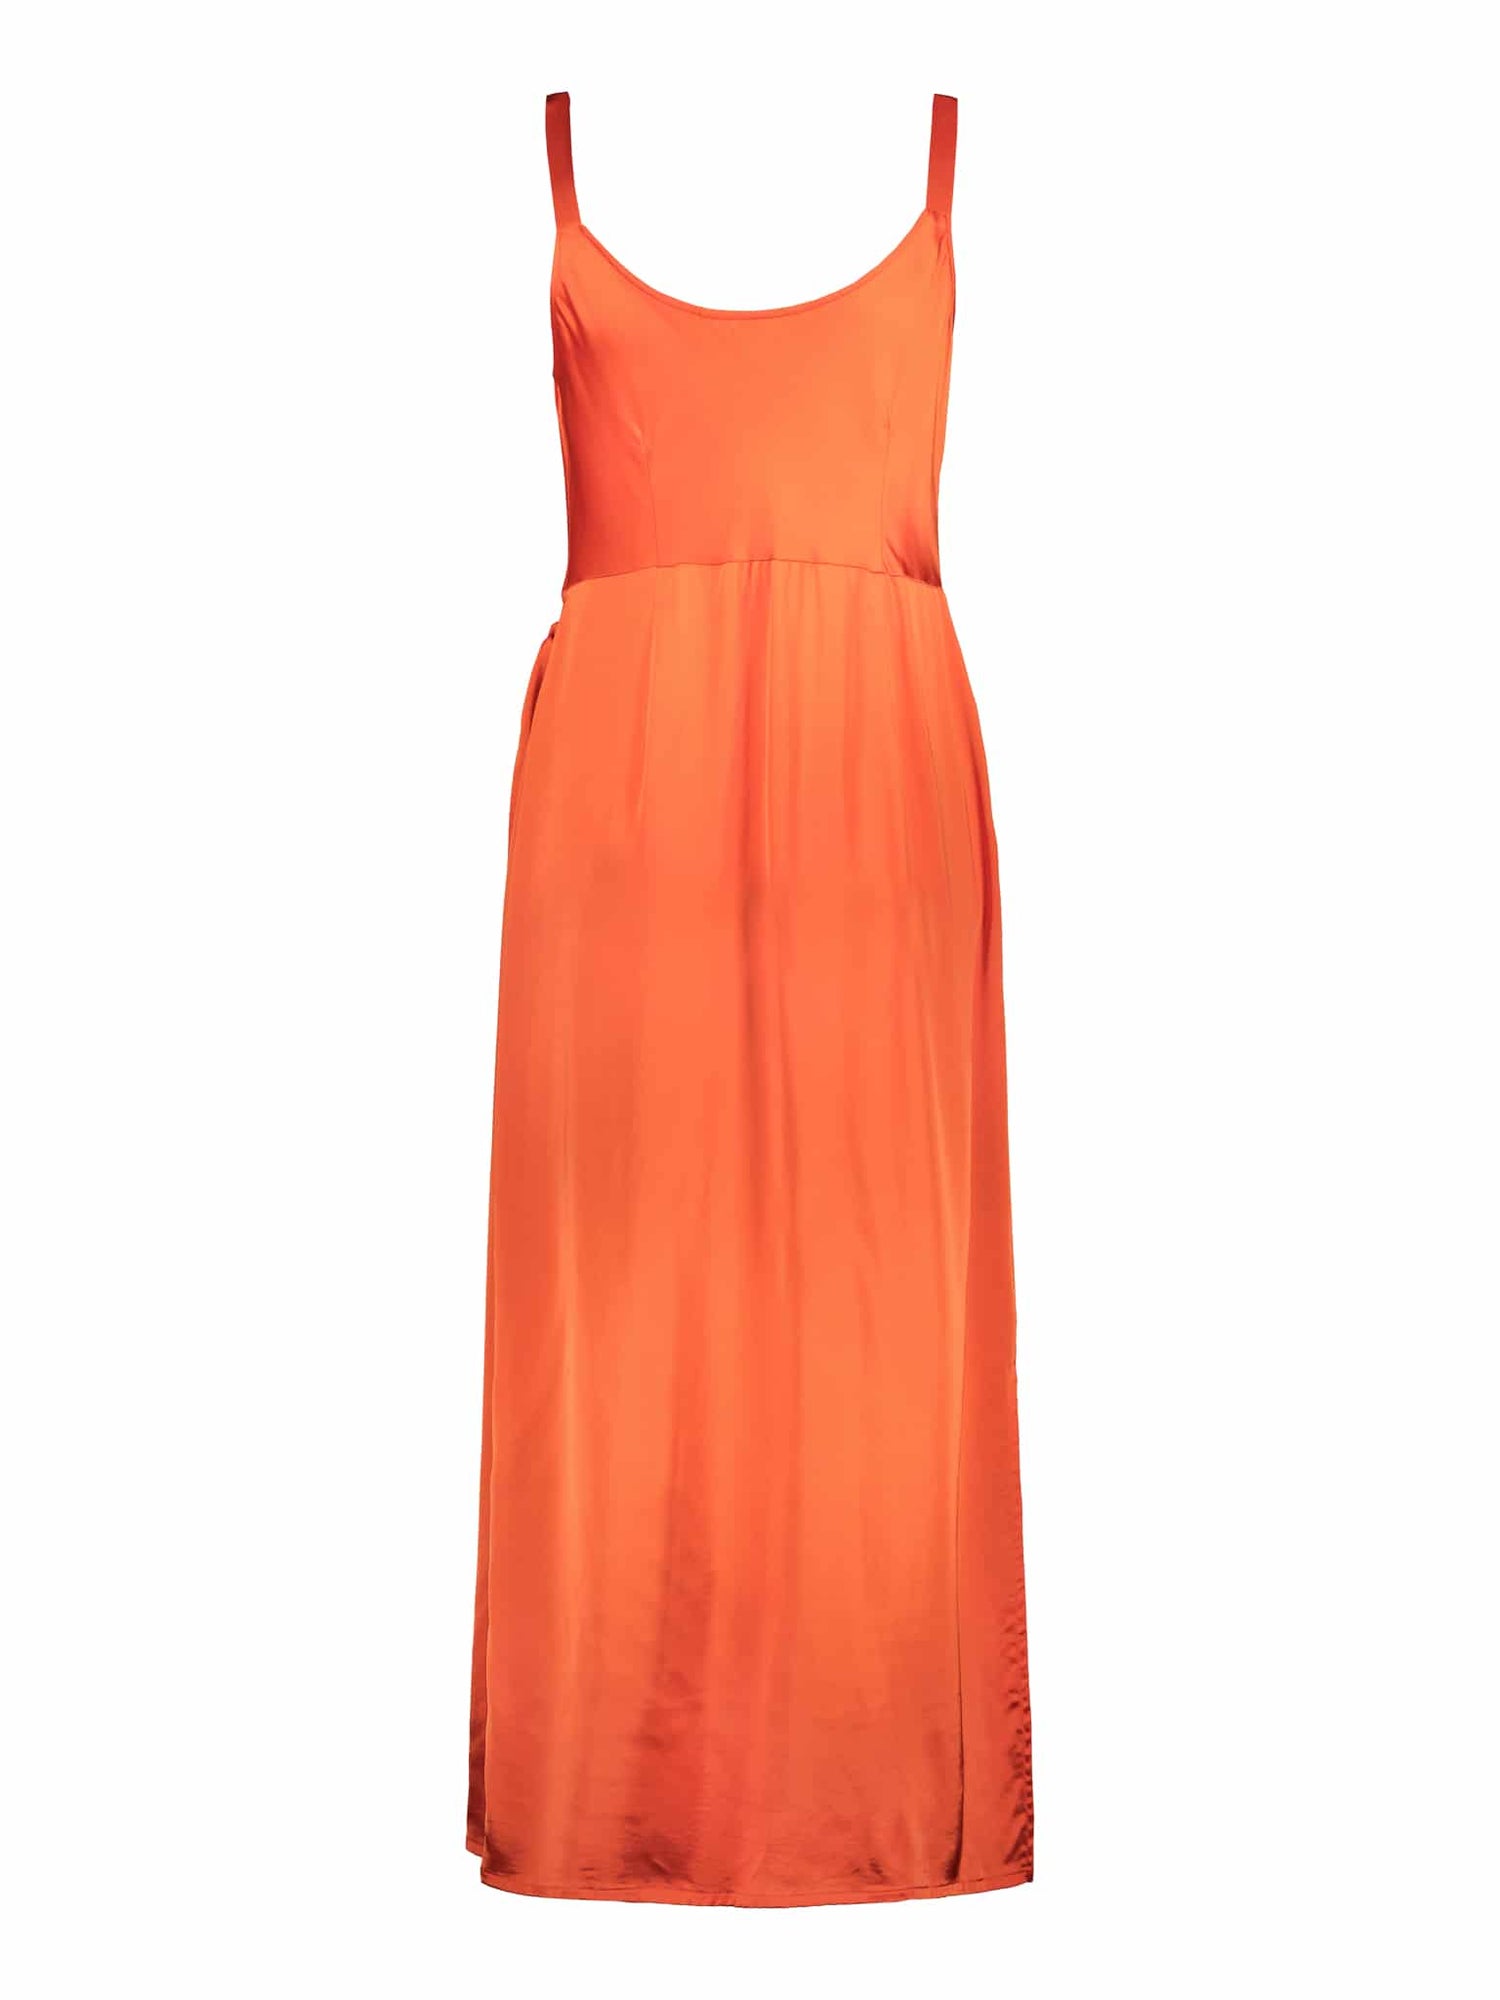 Otava Dress, Vibrant Orange